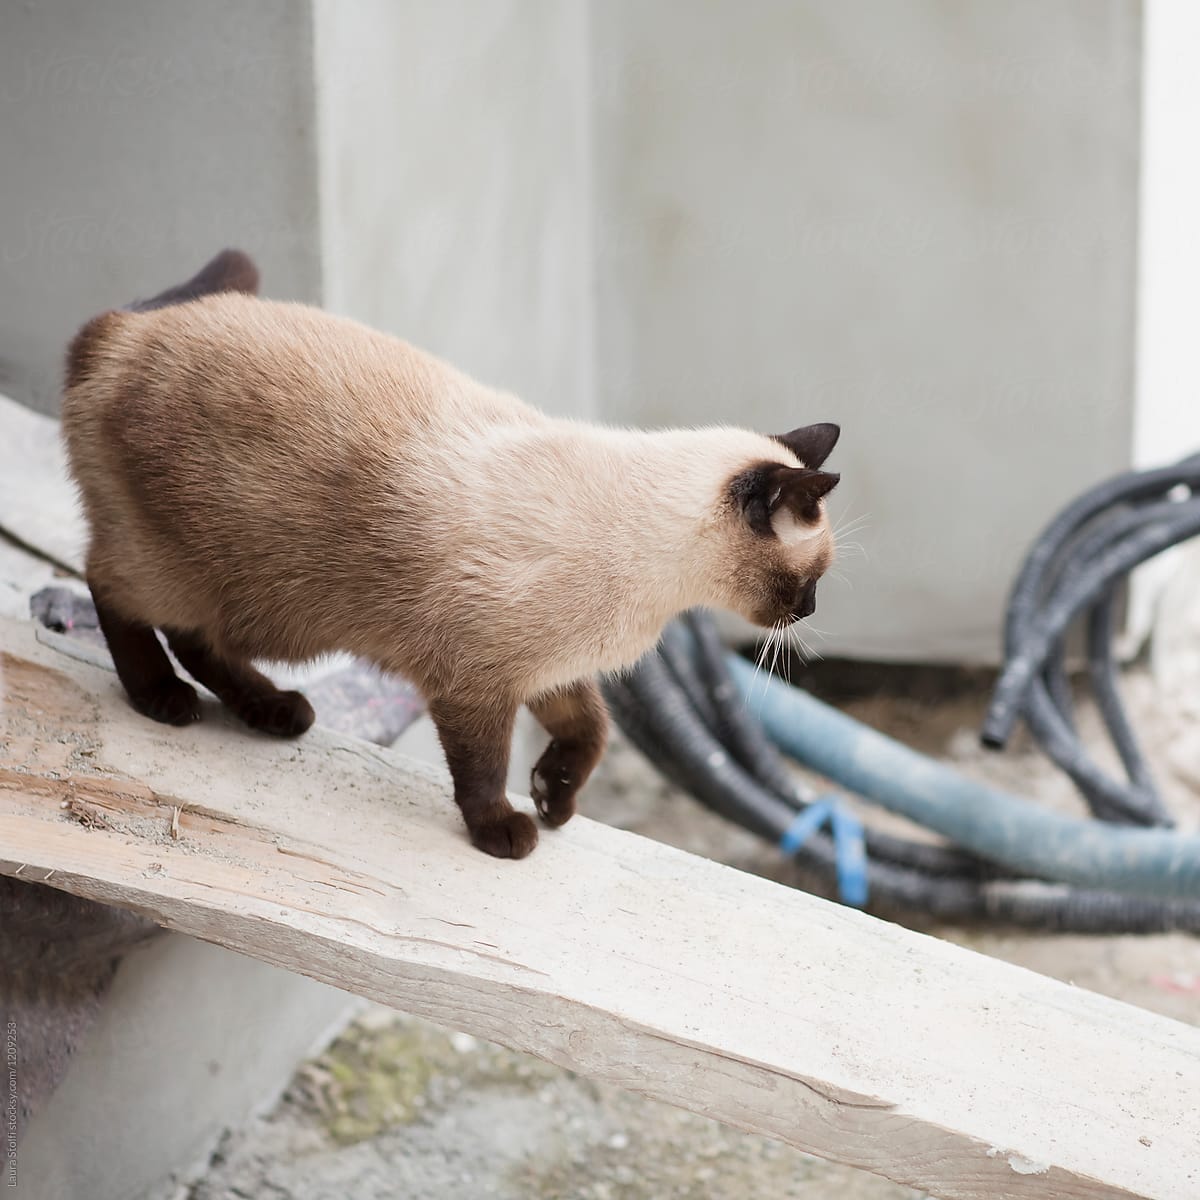 Curious cat exploring residential building site